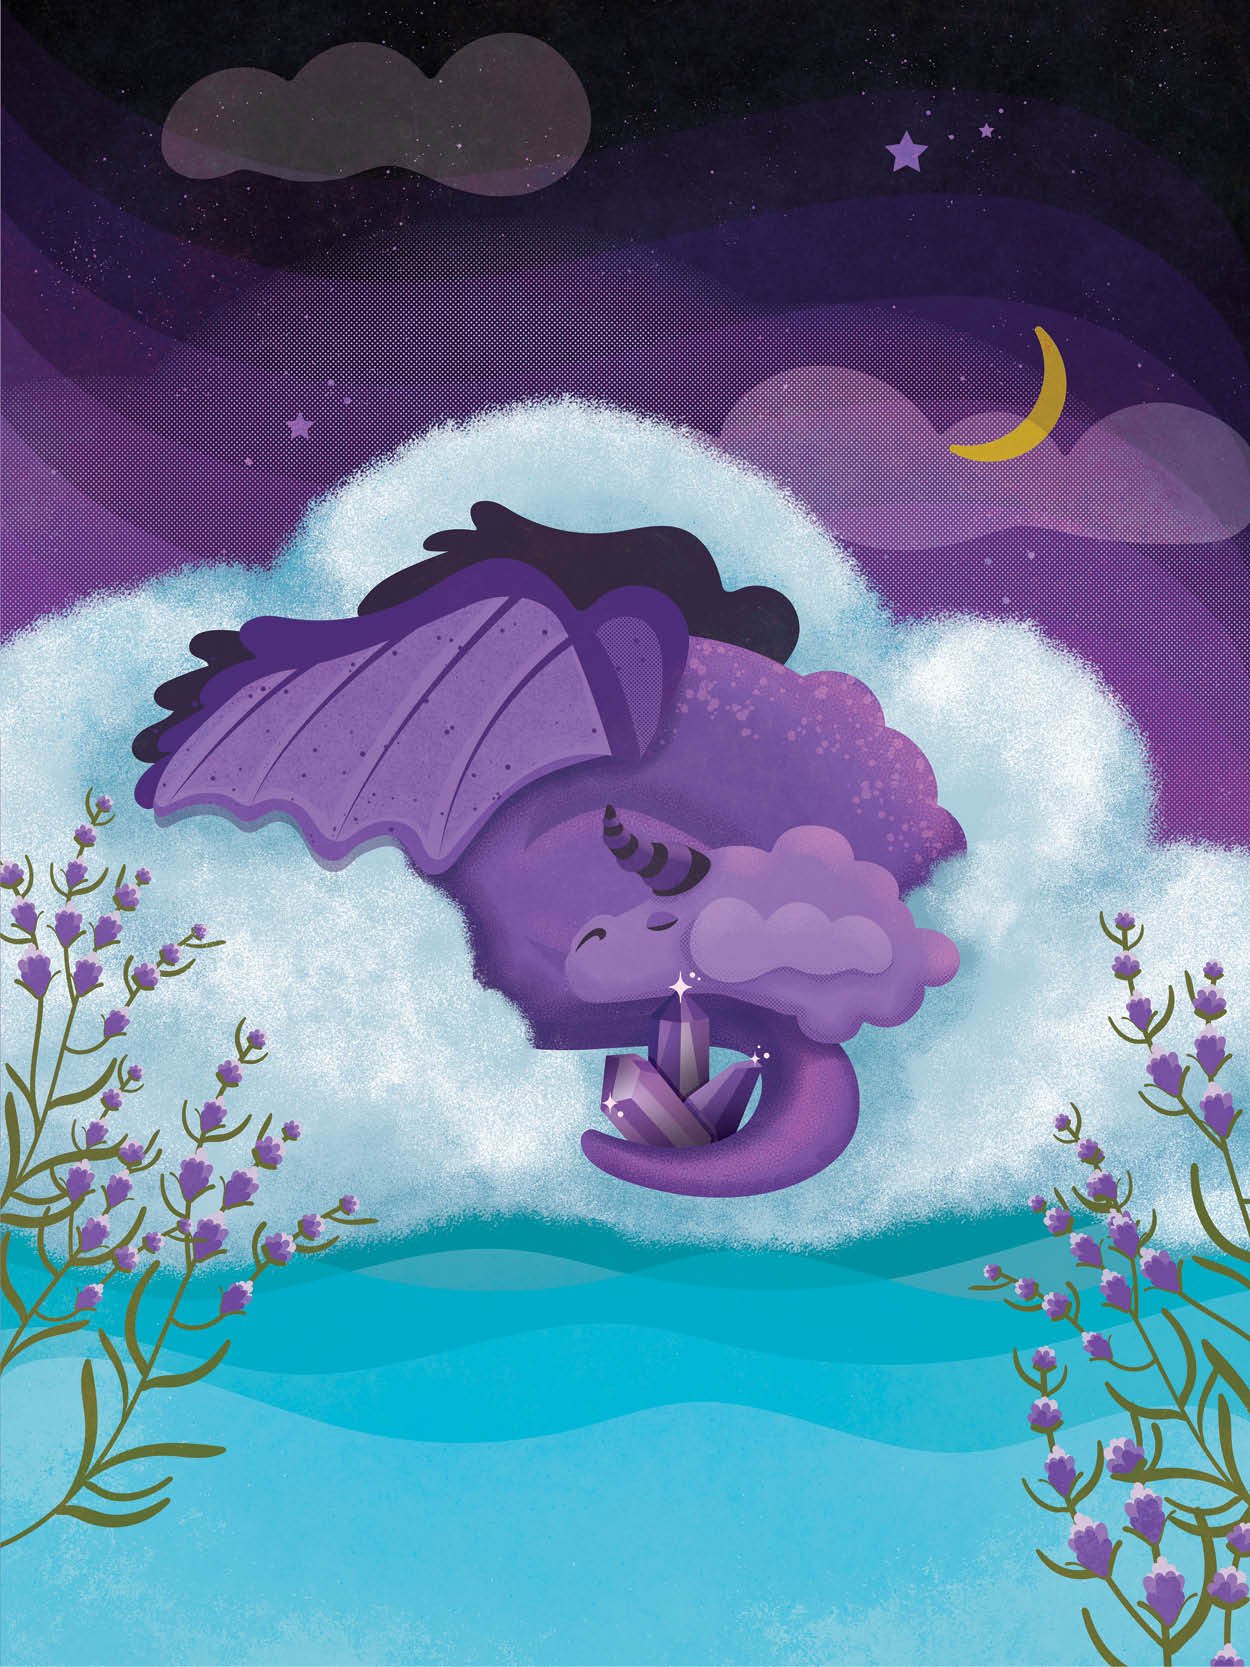 Purple-Sleeping-Dragon-Sci-Fi-Fantasy-Illustration-by-Amanda-Weedmark.jpg